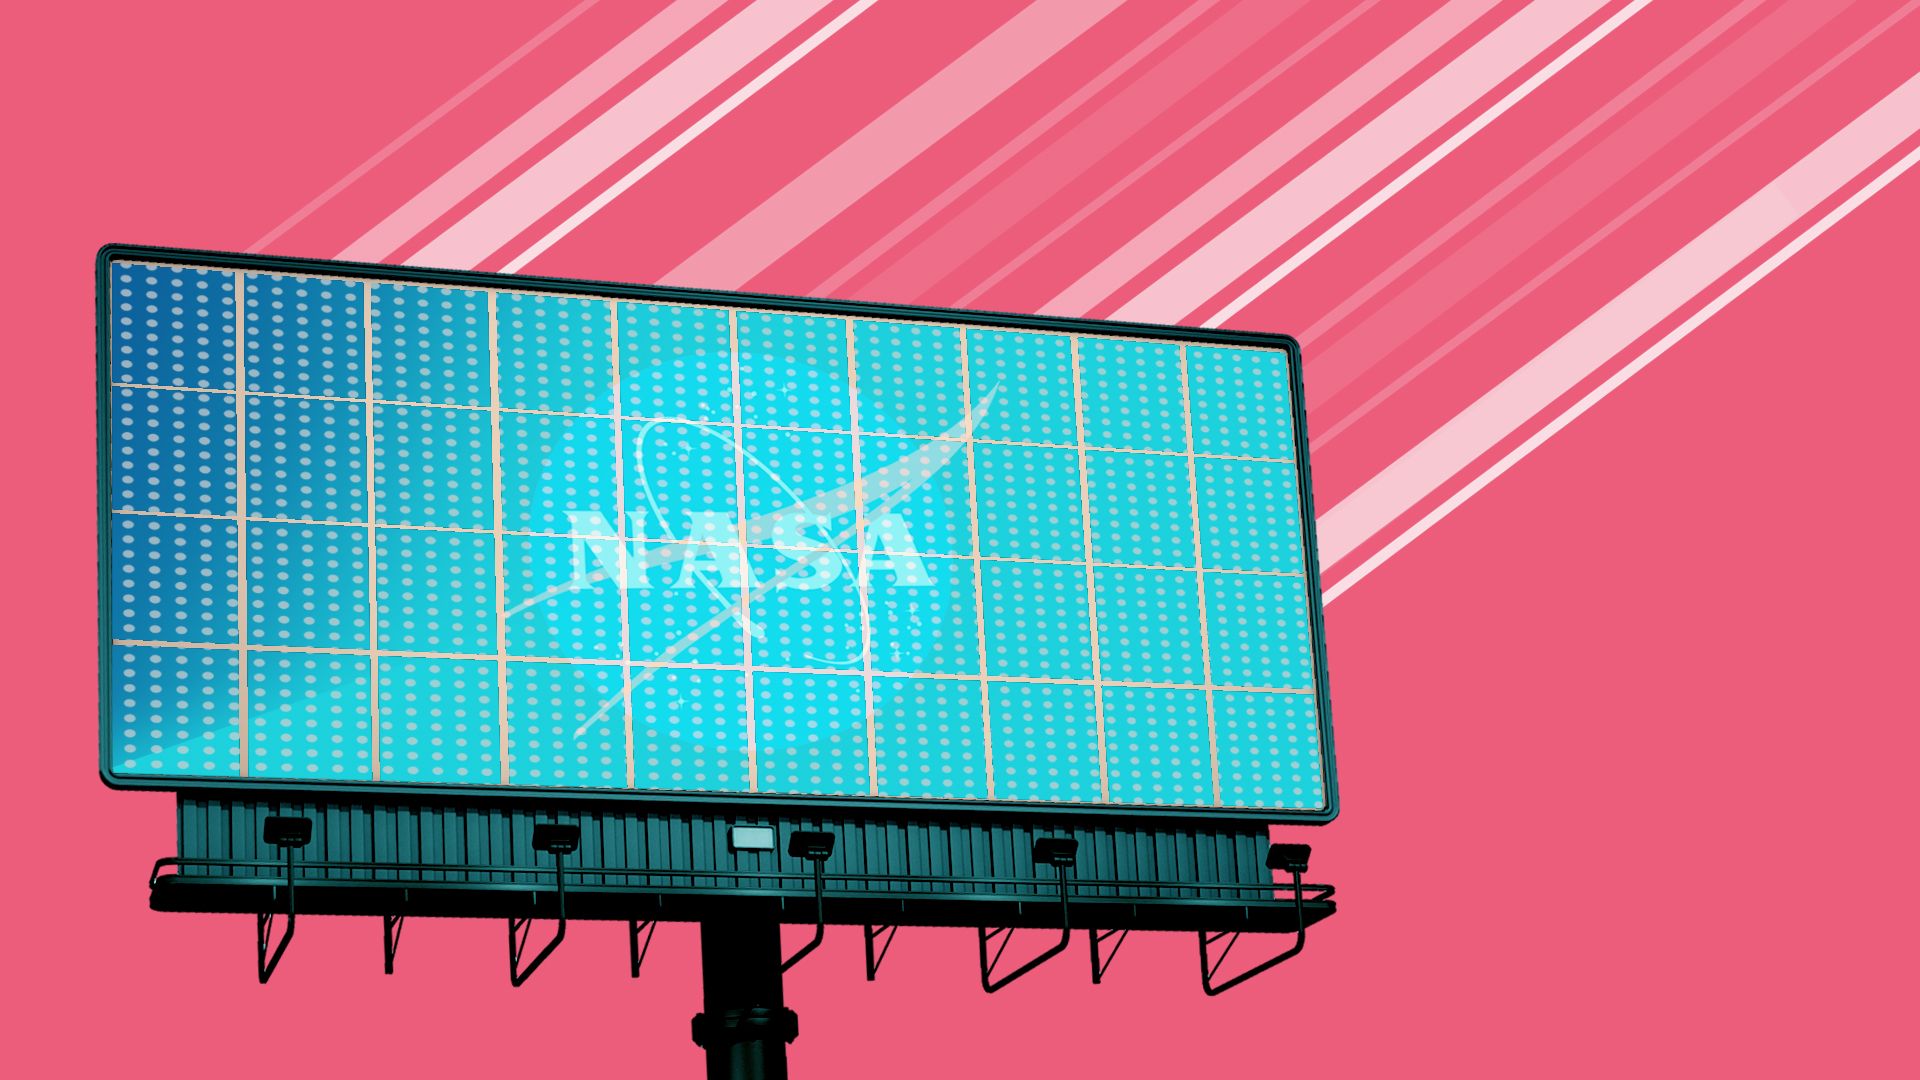 Illustration of a billboard advertisement for NASA